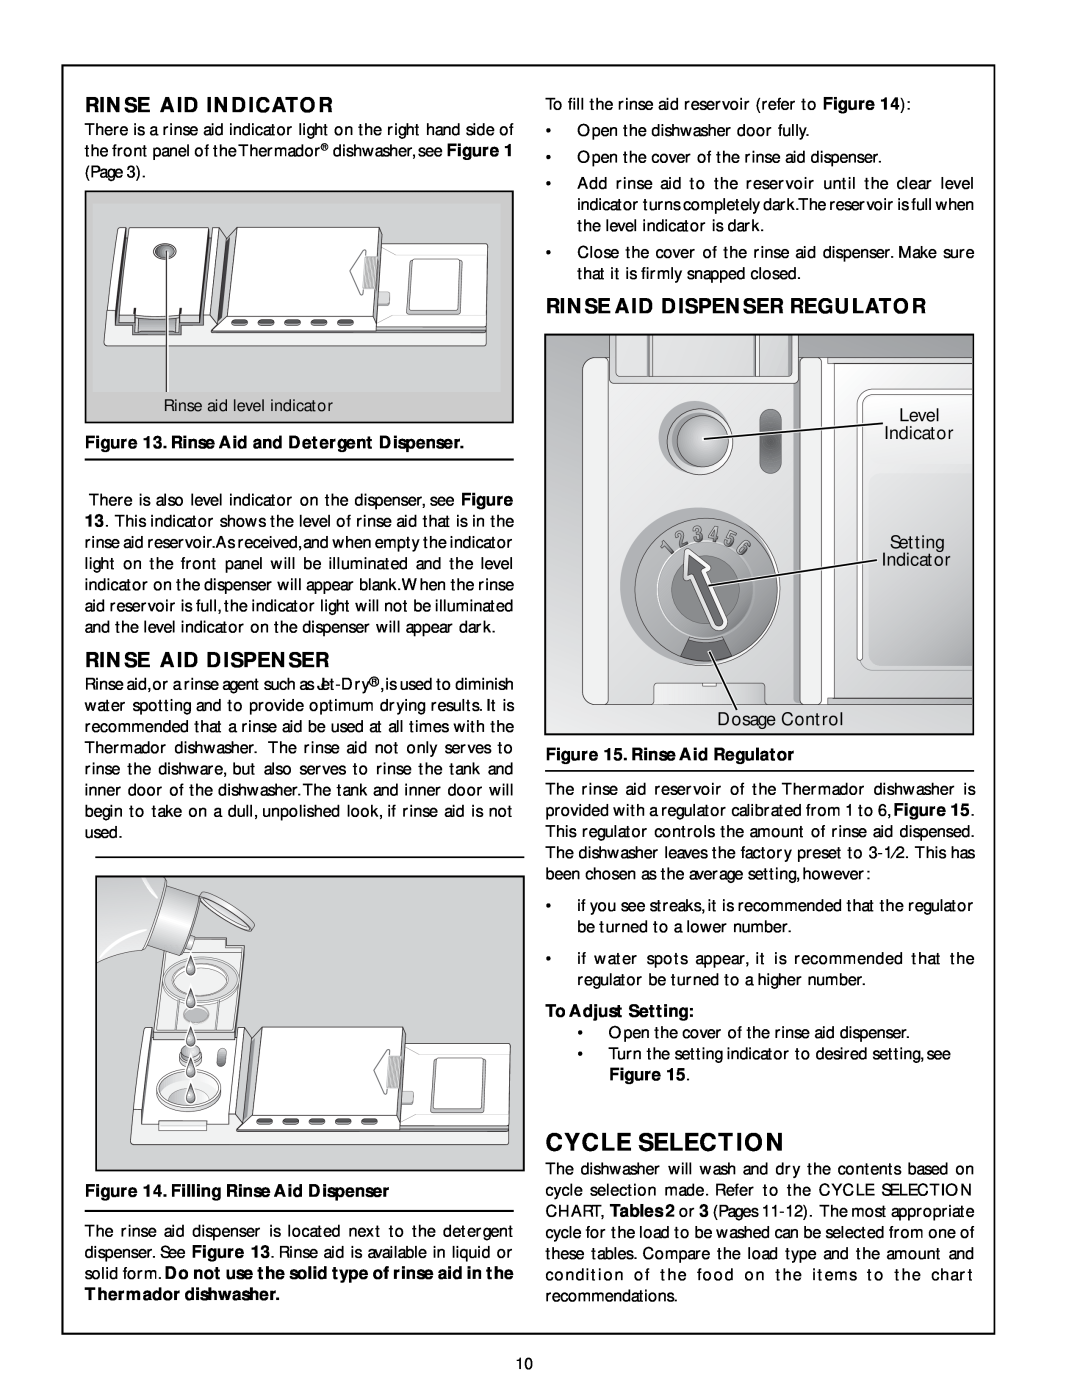 Thermador DWI246UW Cycle Selection, Rinse Aid Indicator, Rinse Aid Dispenser Regulator, Filling Rinse Aid Dispenser 